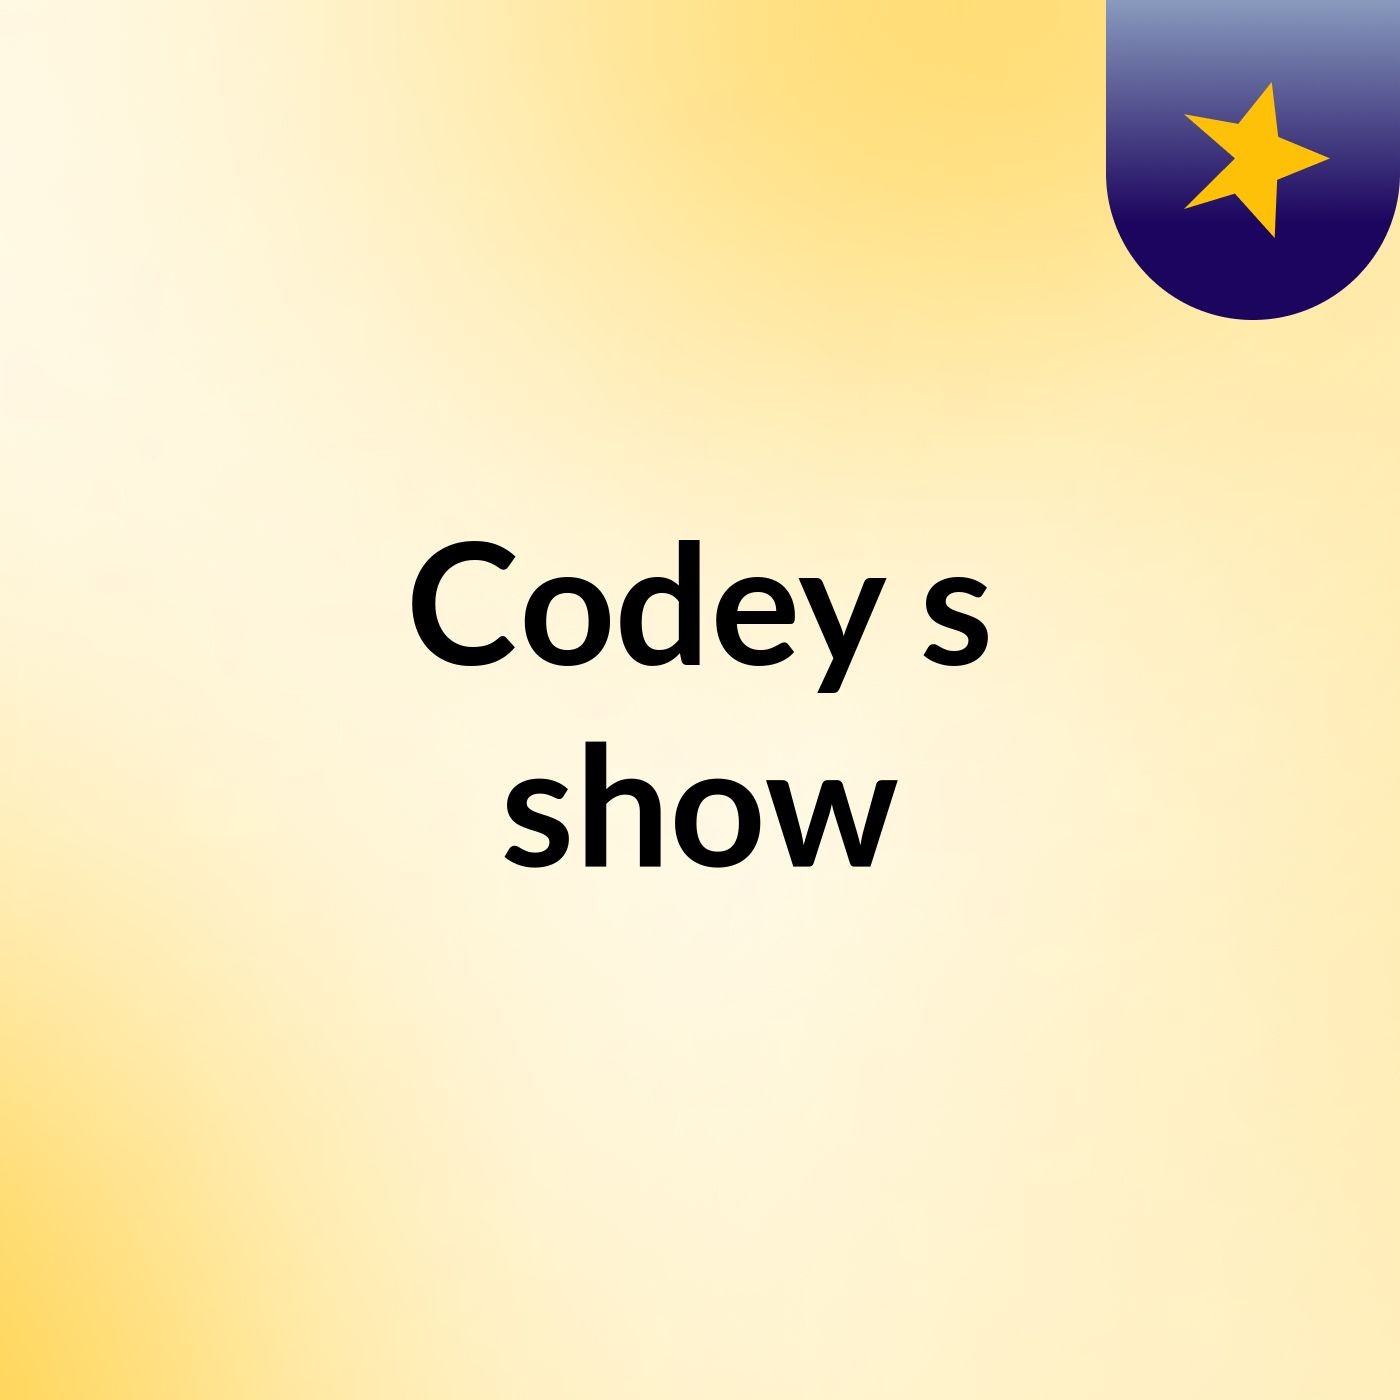 Codey's show